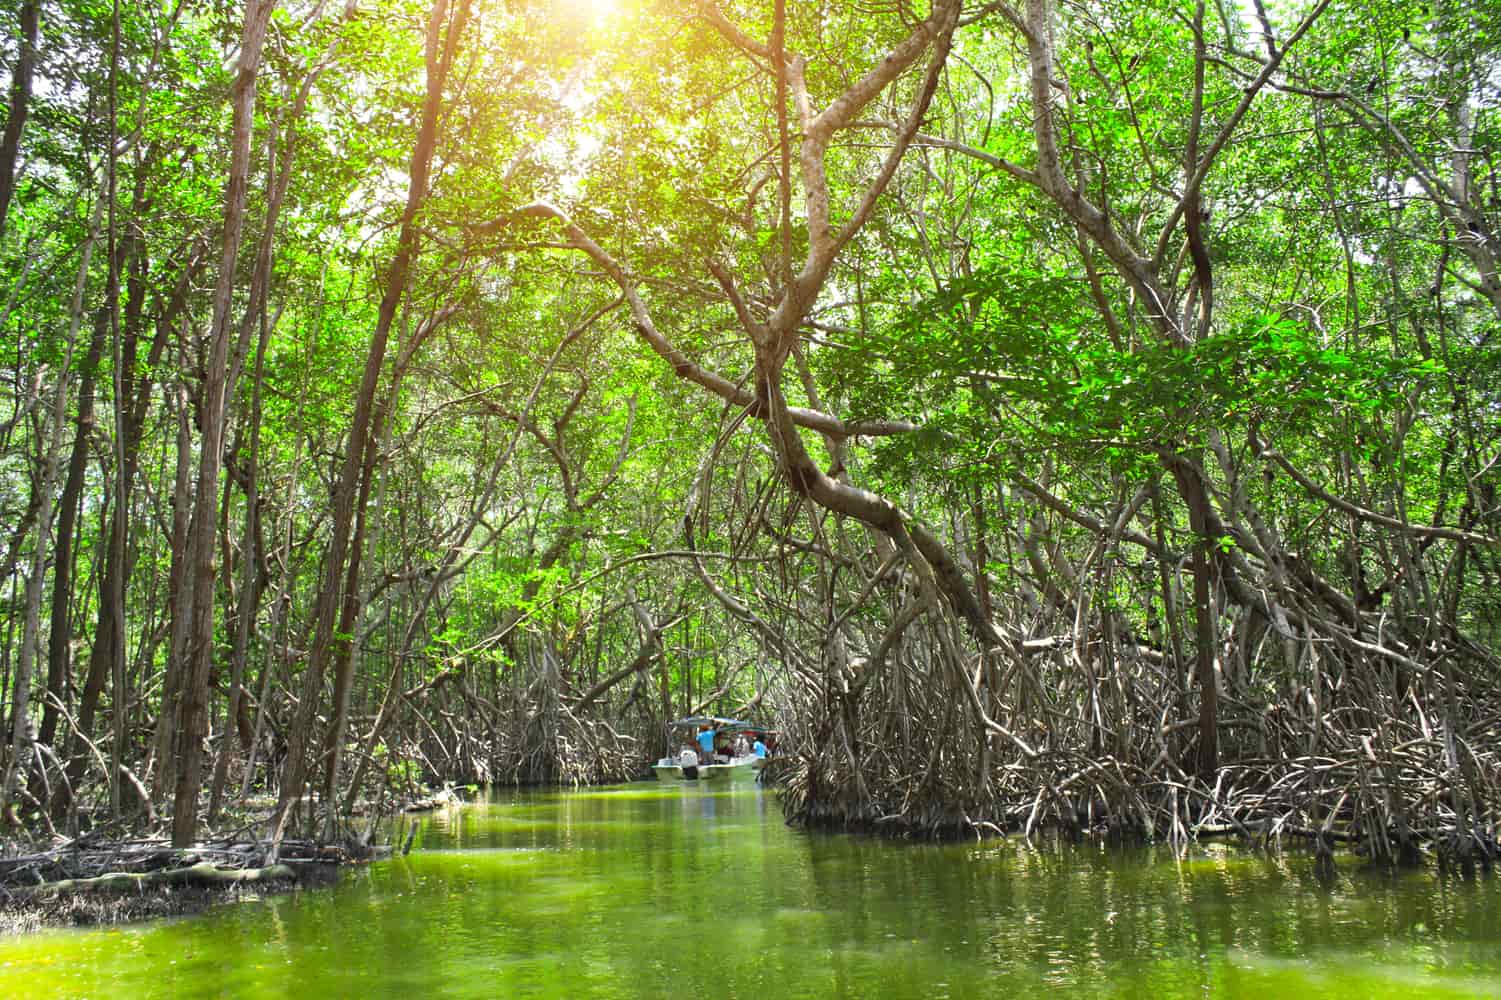 Celestun mangrove Resize - Adobe